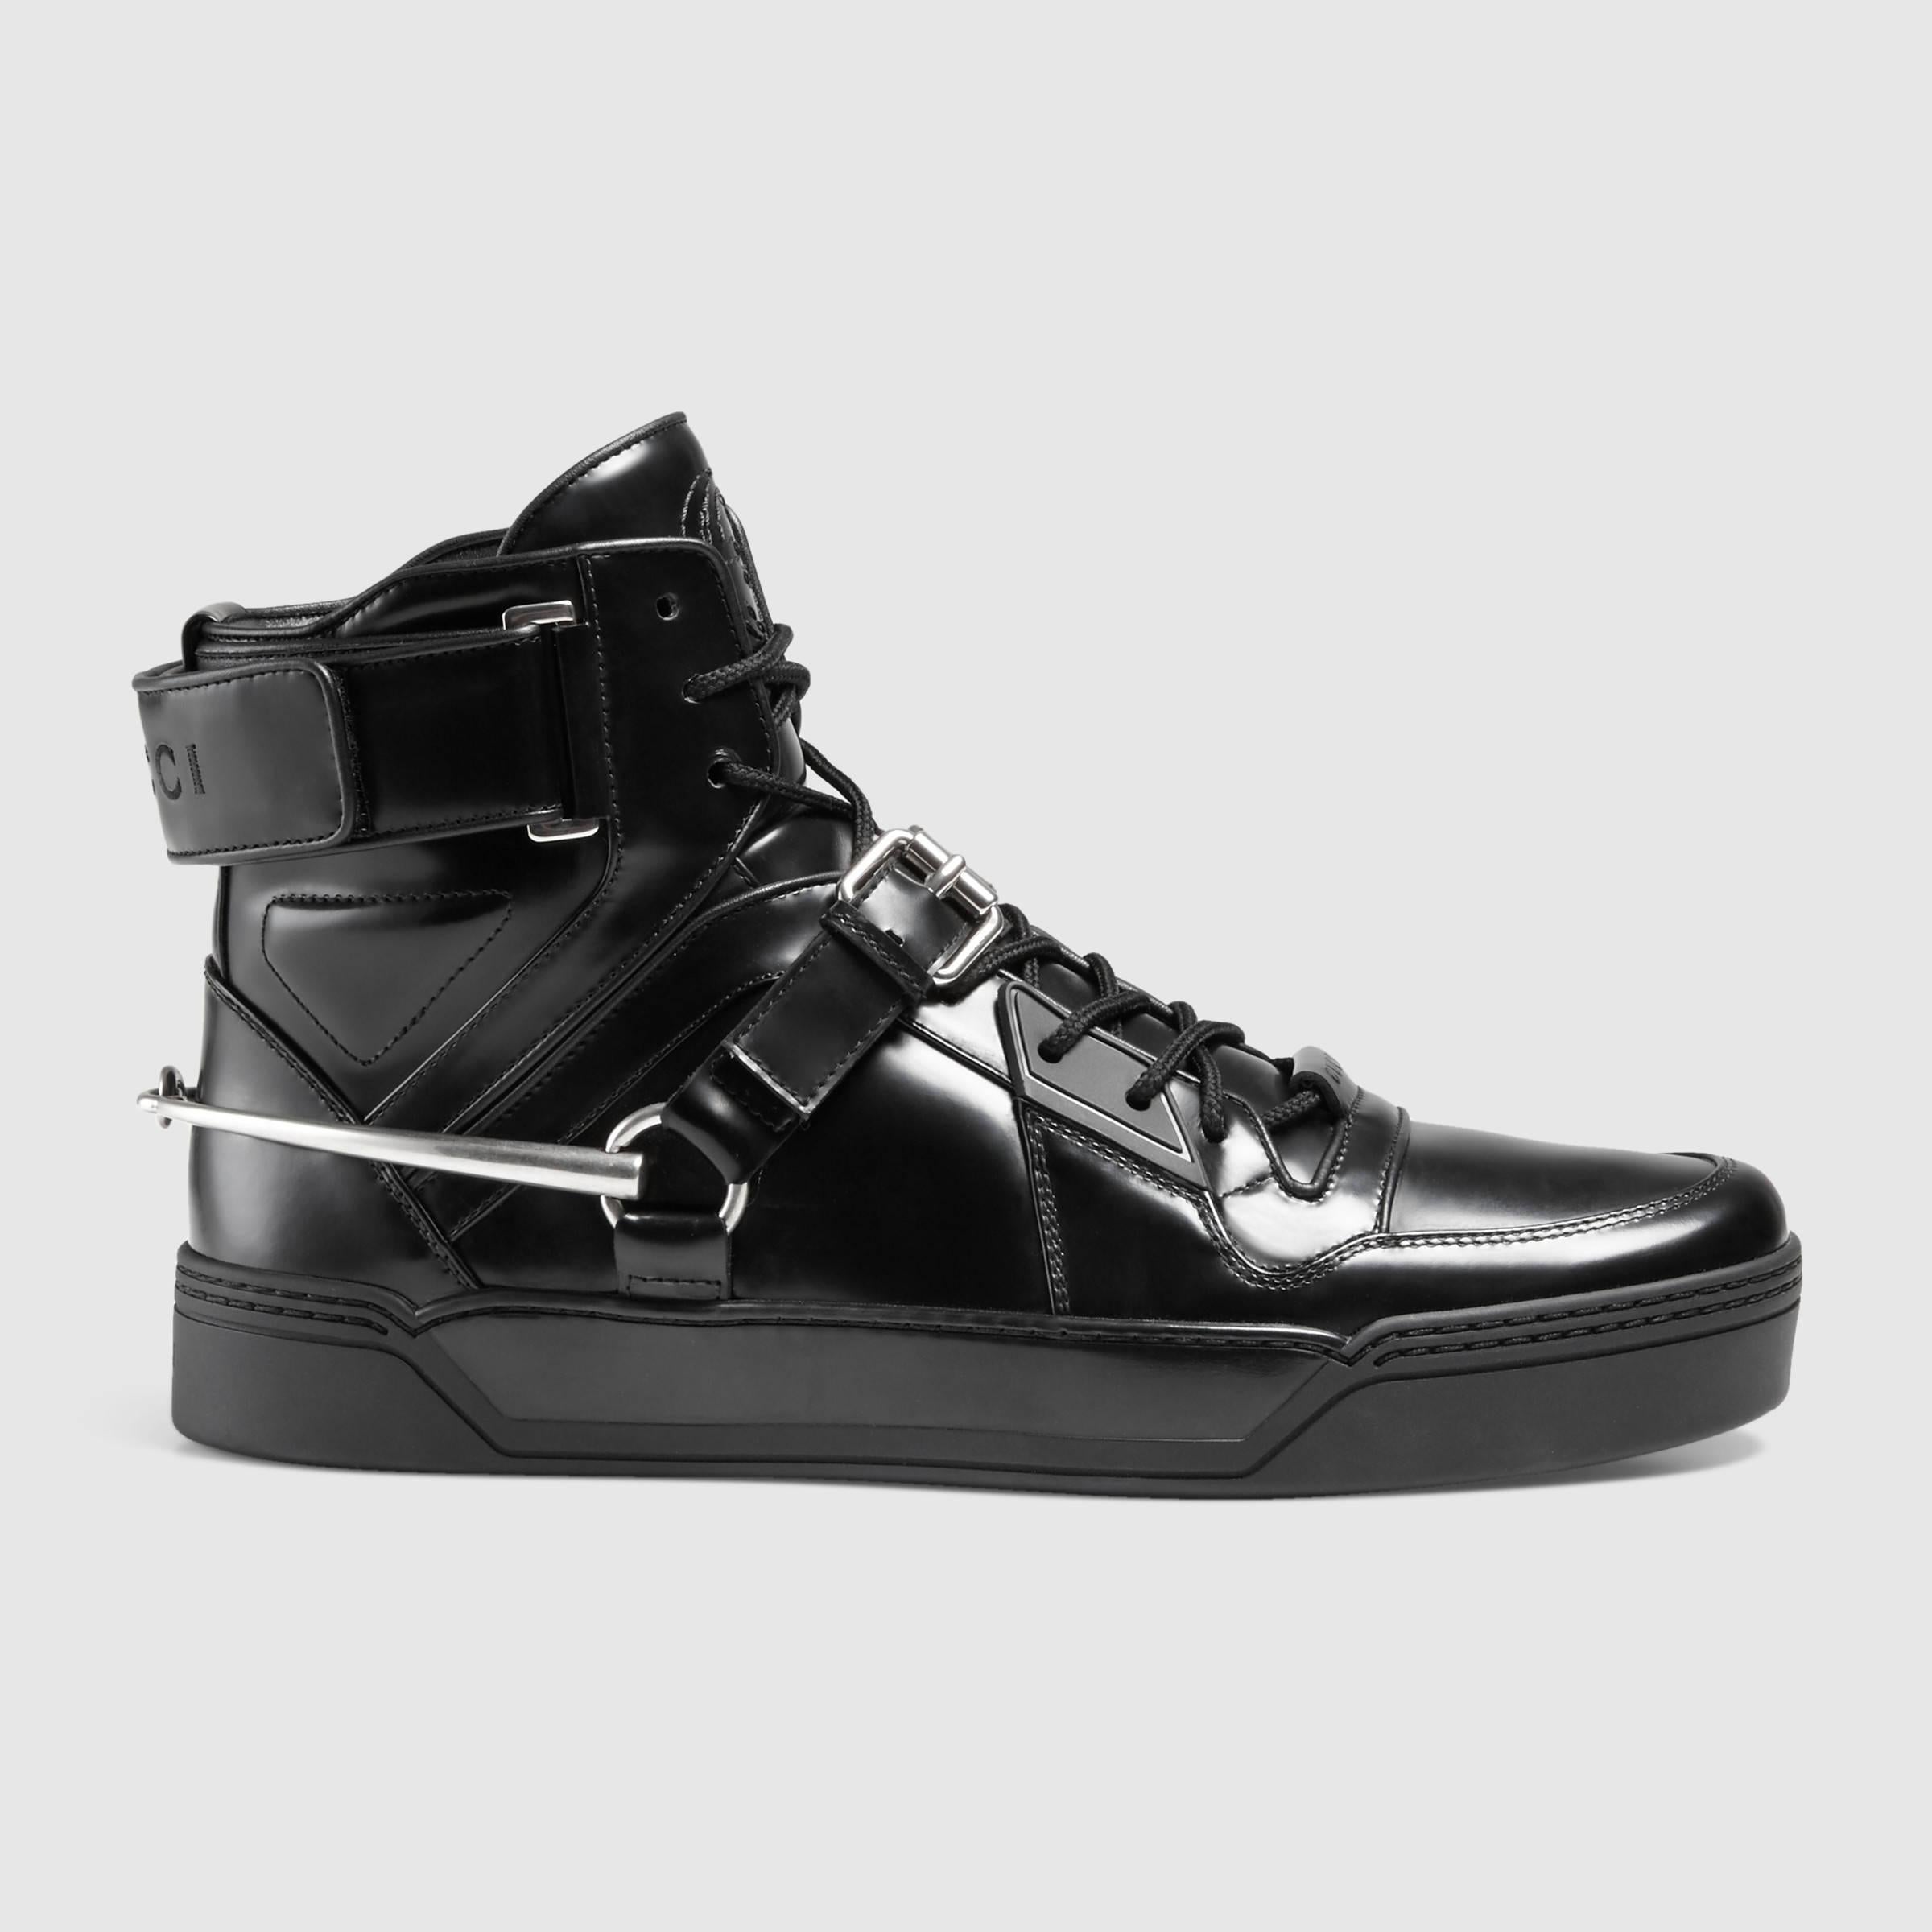 New Gucci Men's Black *Basket Darko* High-Top Sneaker Gucci sizes 8.5  9  9.5 2